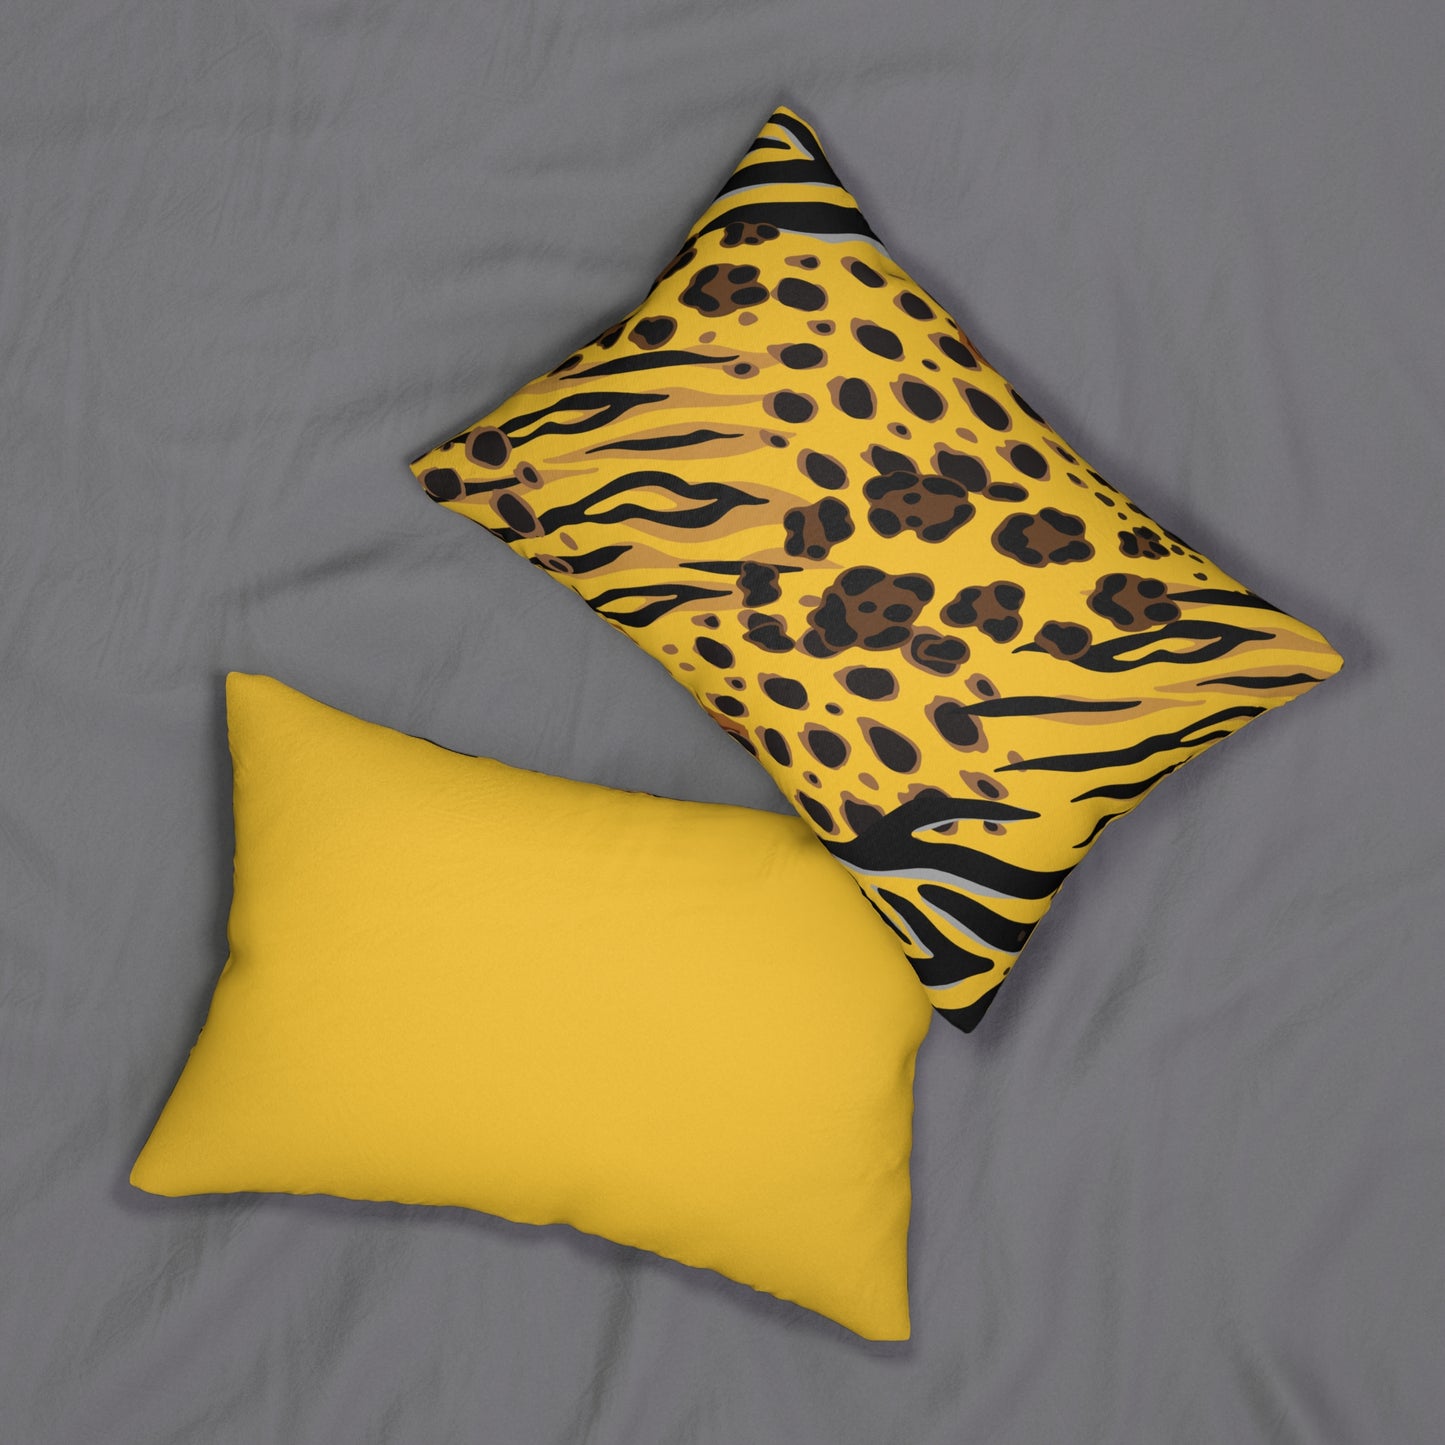 Almohada decorativa dorada con estampado animal (doble)